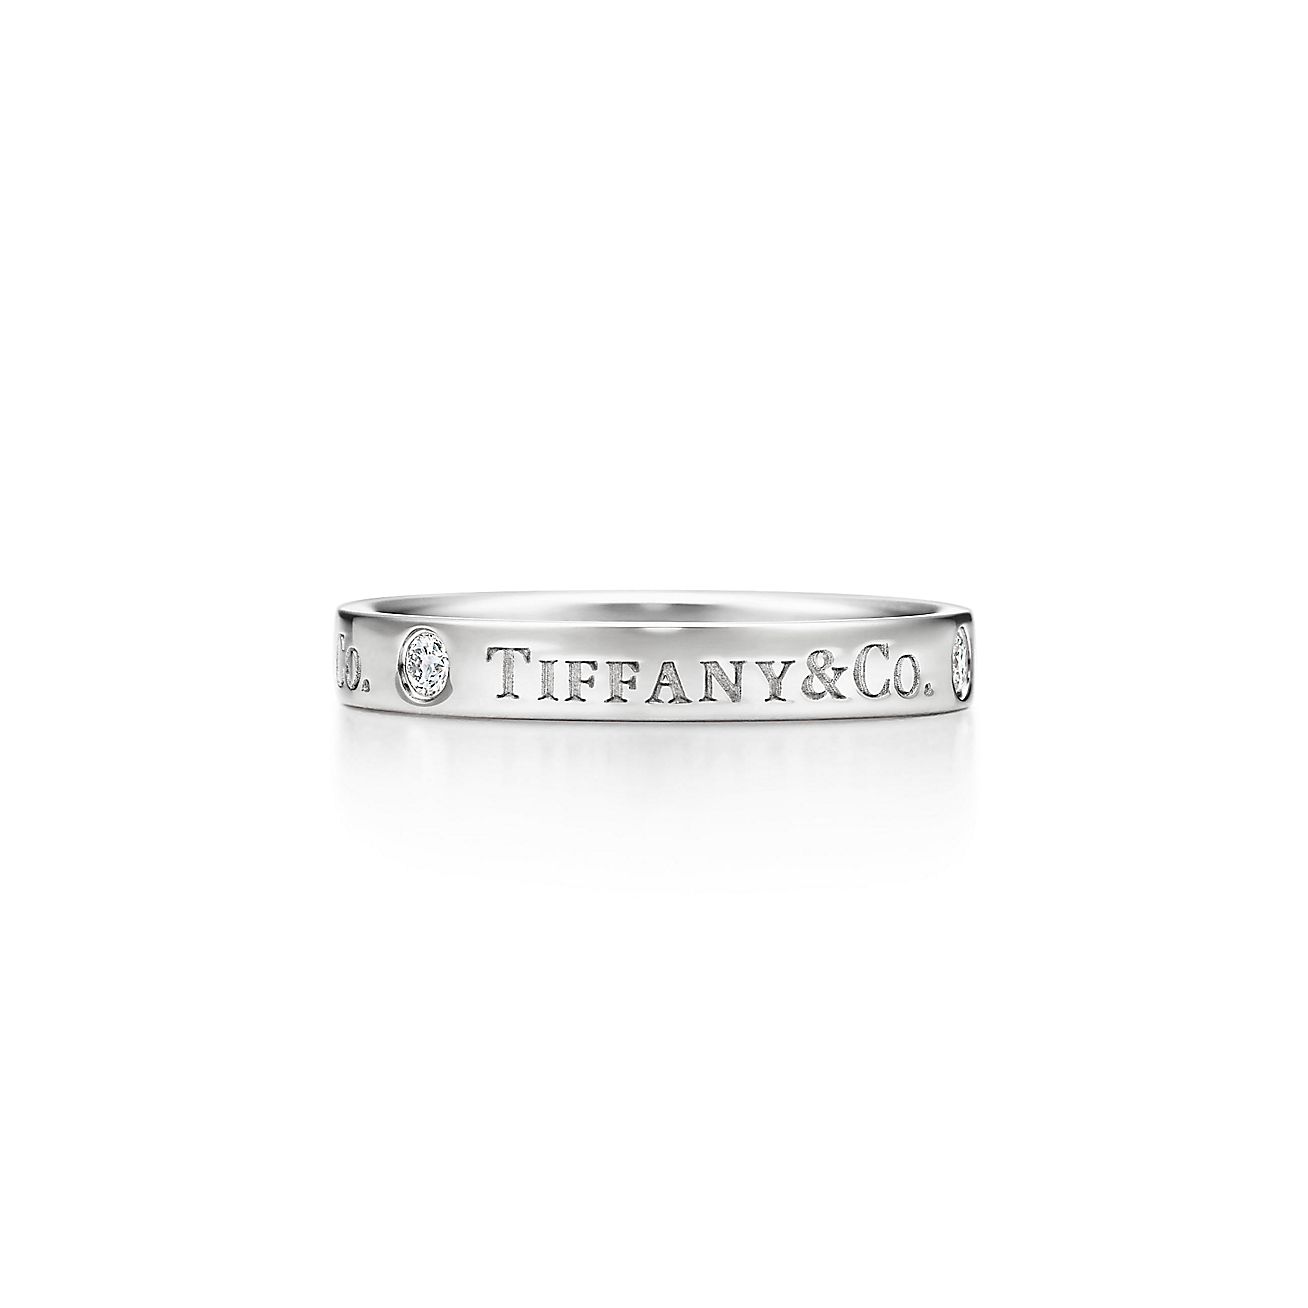 Tiffany rings